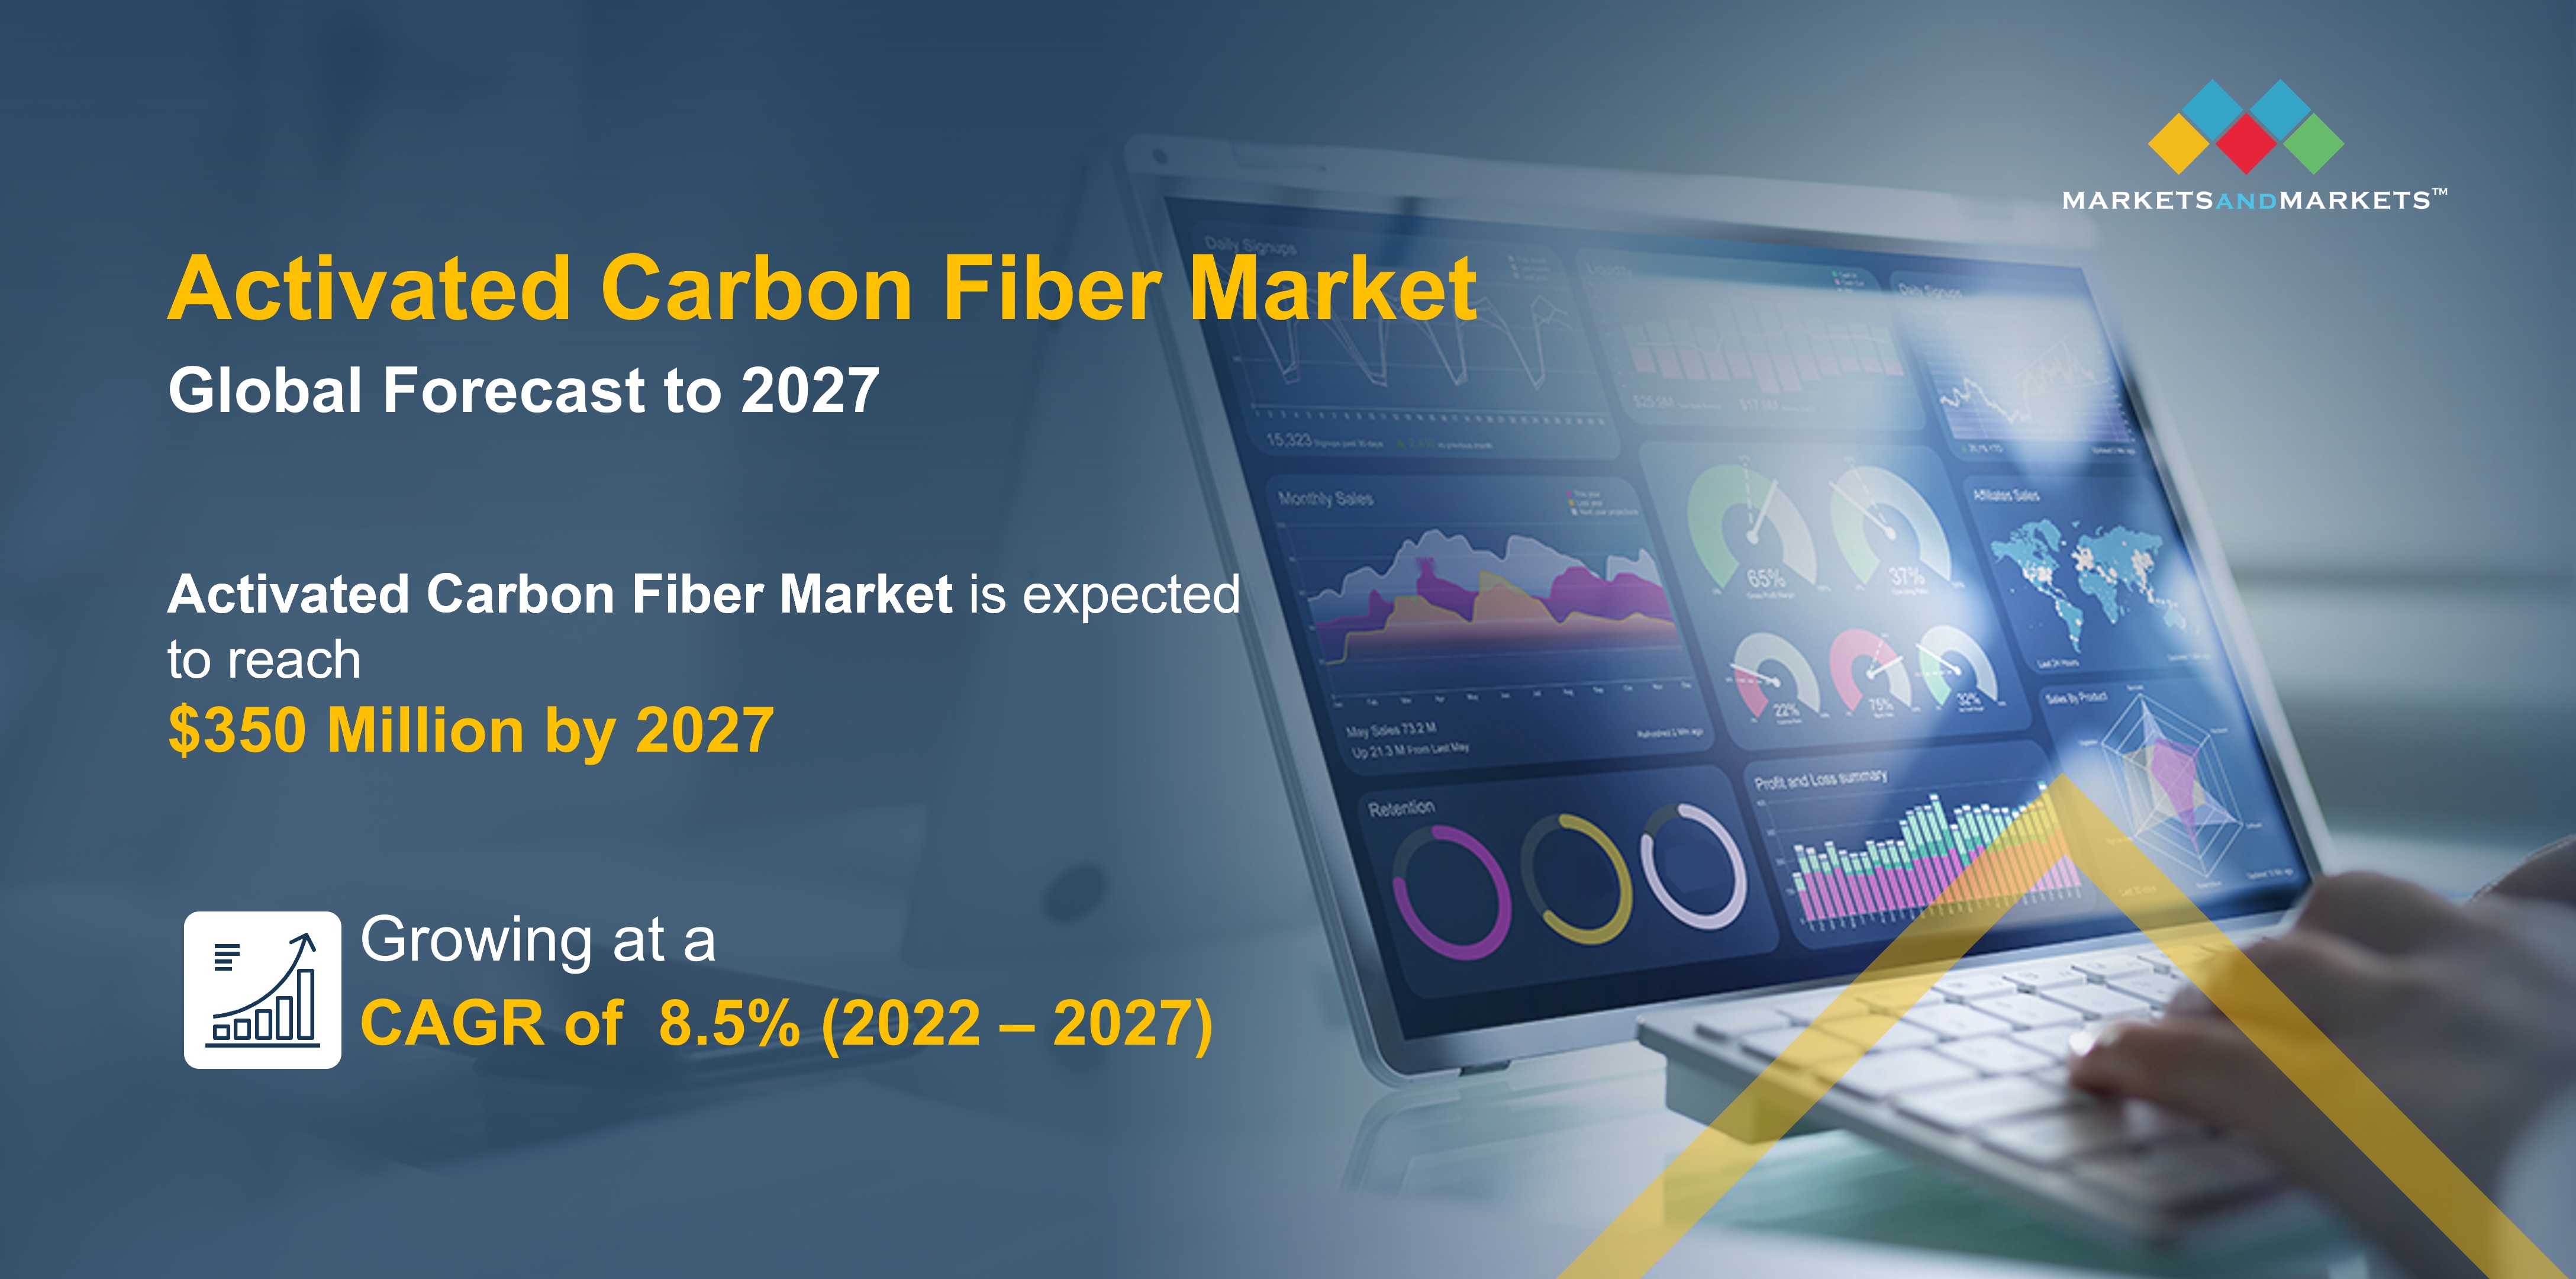 Activated Carbon Fiber Market 